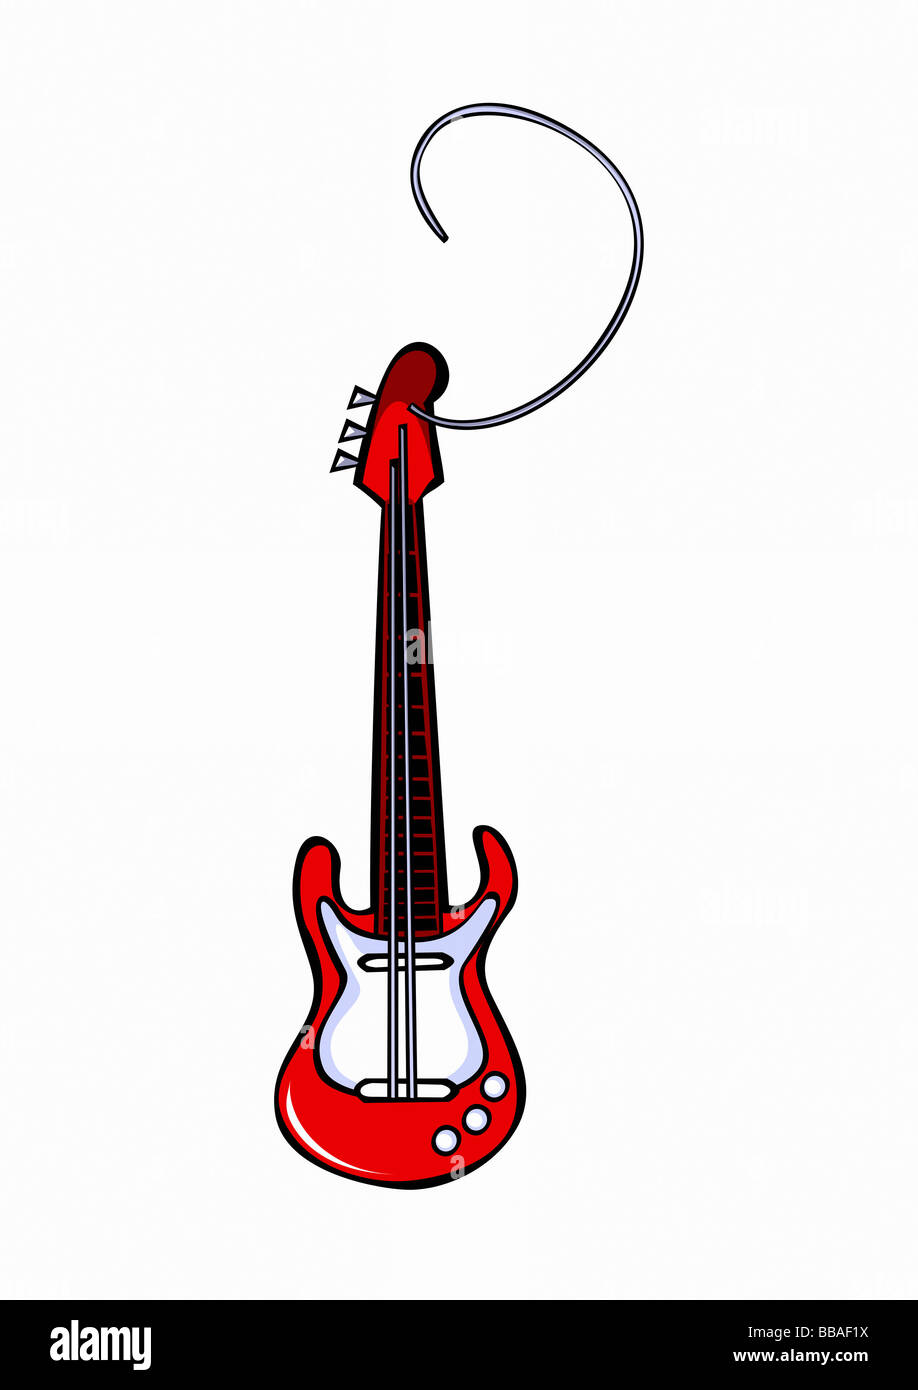 A guitar with a broken guitar string Stock Photo - Alamy